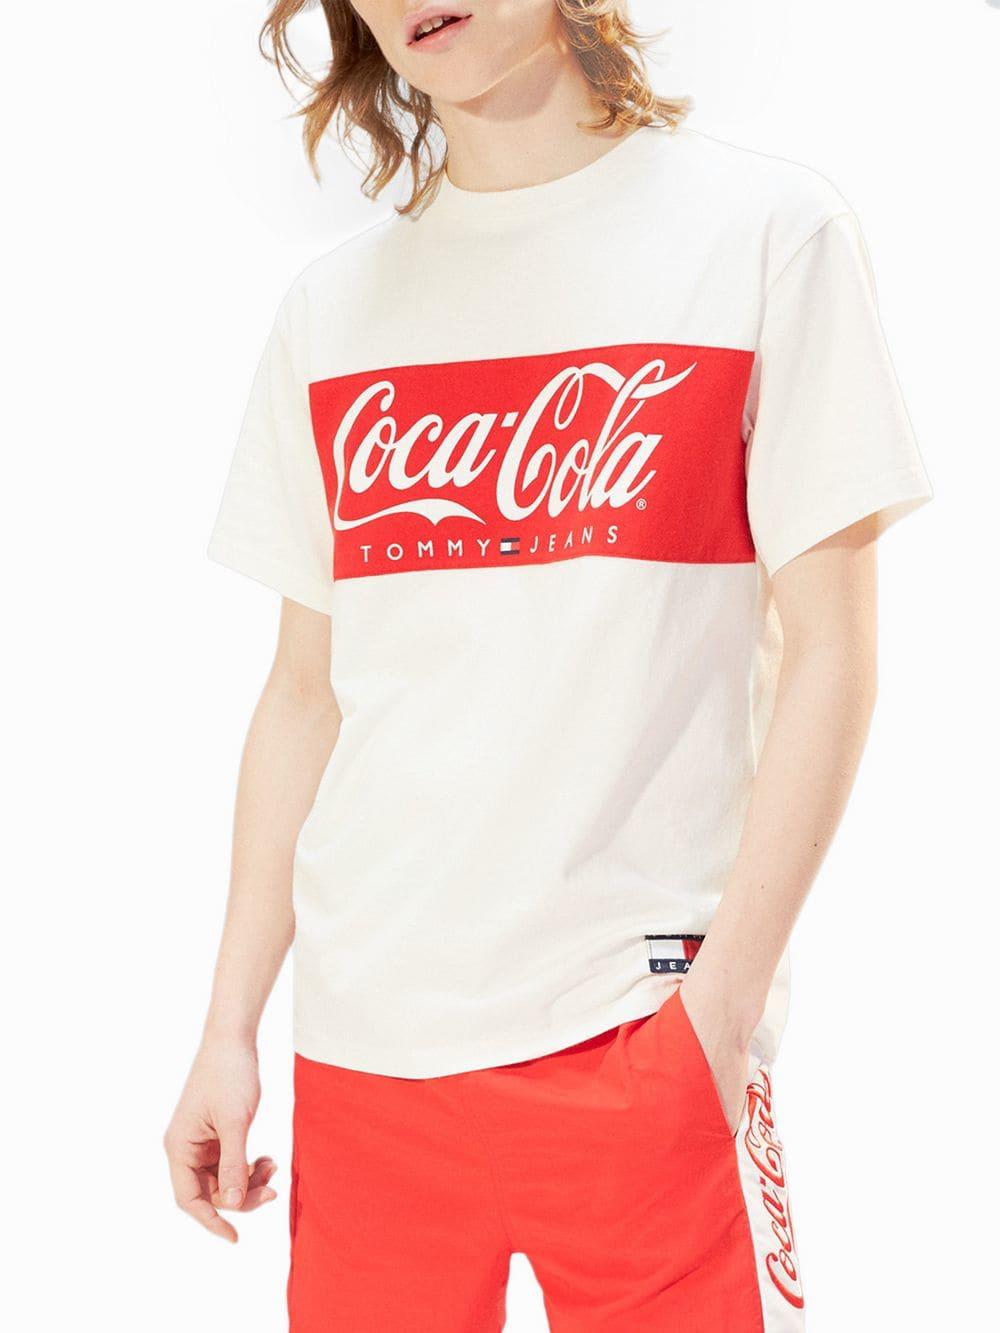 Tommy Hilfiger Denim X Coca-cola Tee in White for Men - Lyst